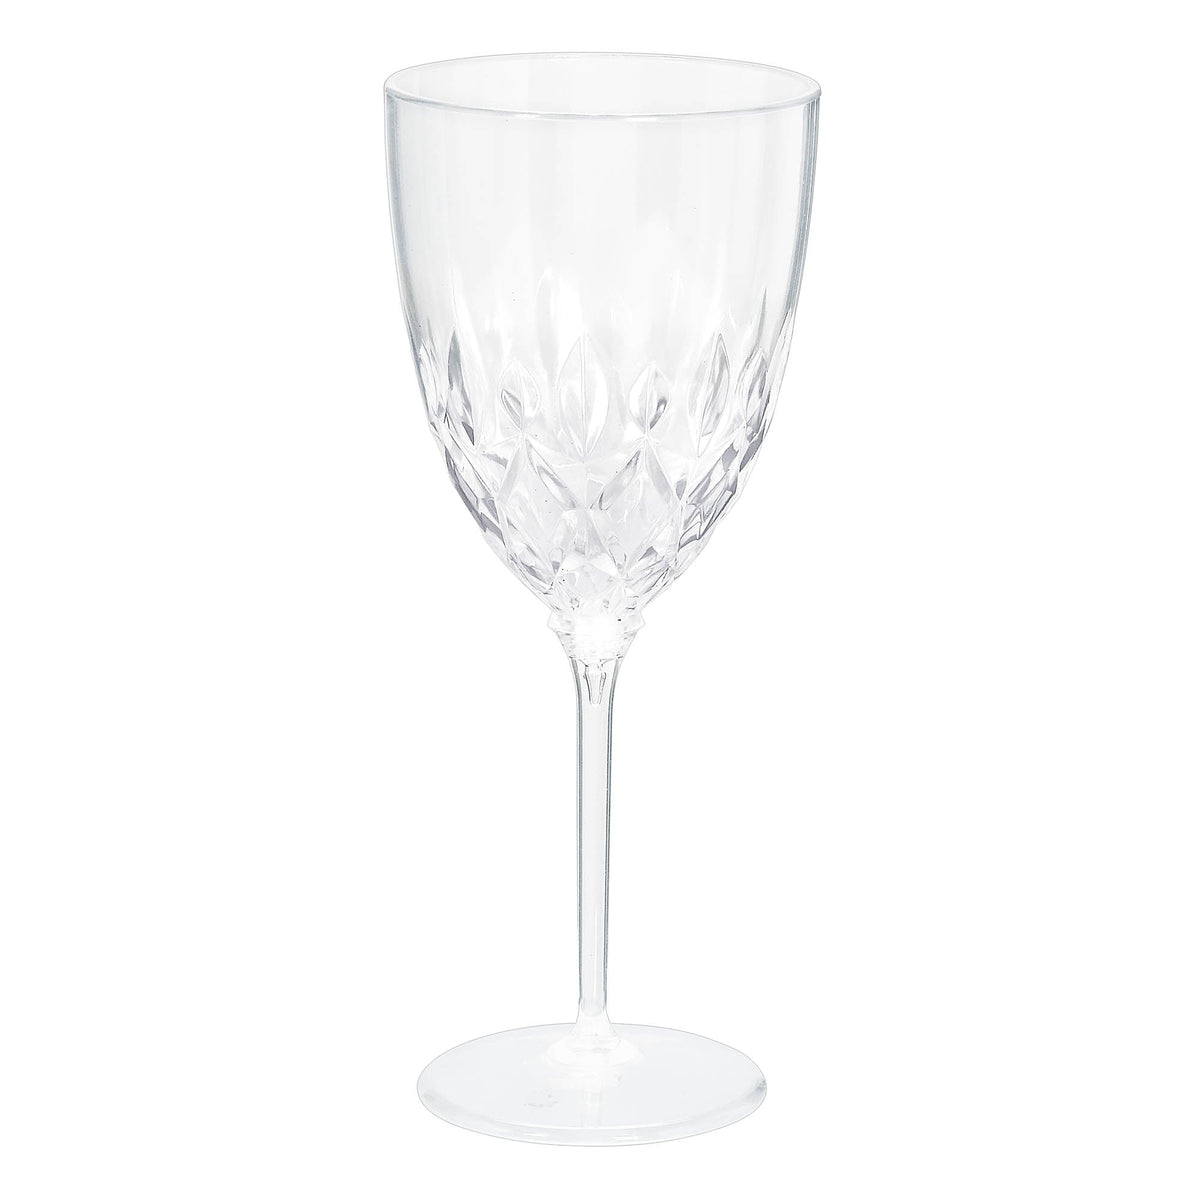 Crystal Look Clear Plastic 8oz. Wine Glasses